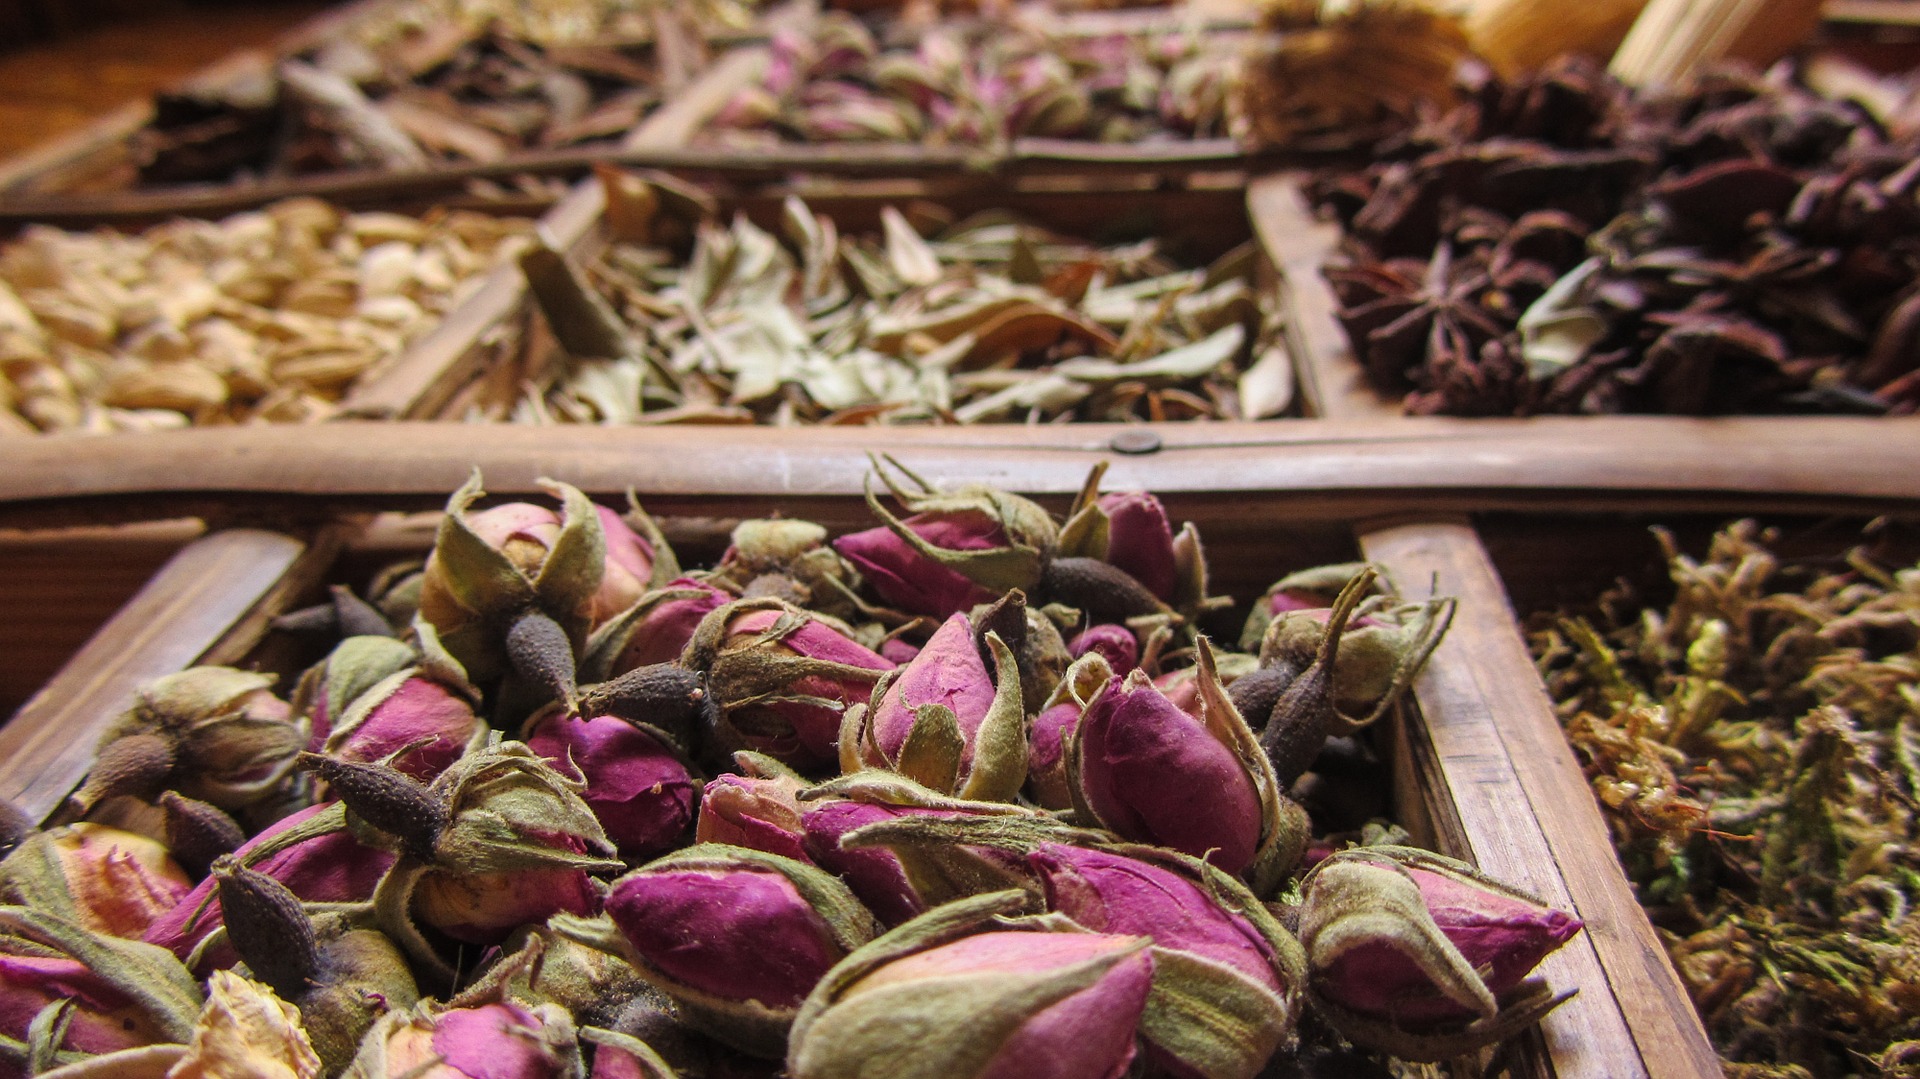 Pixabay – Morocco Spices